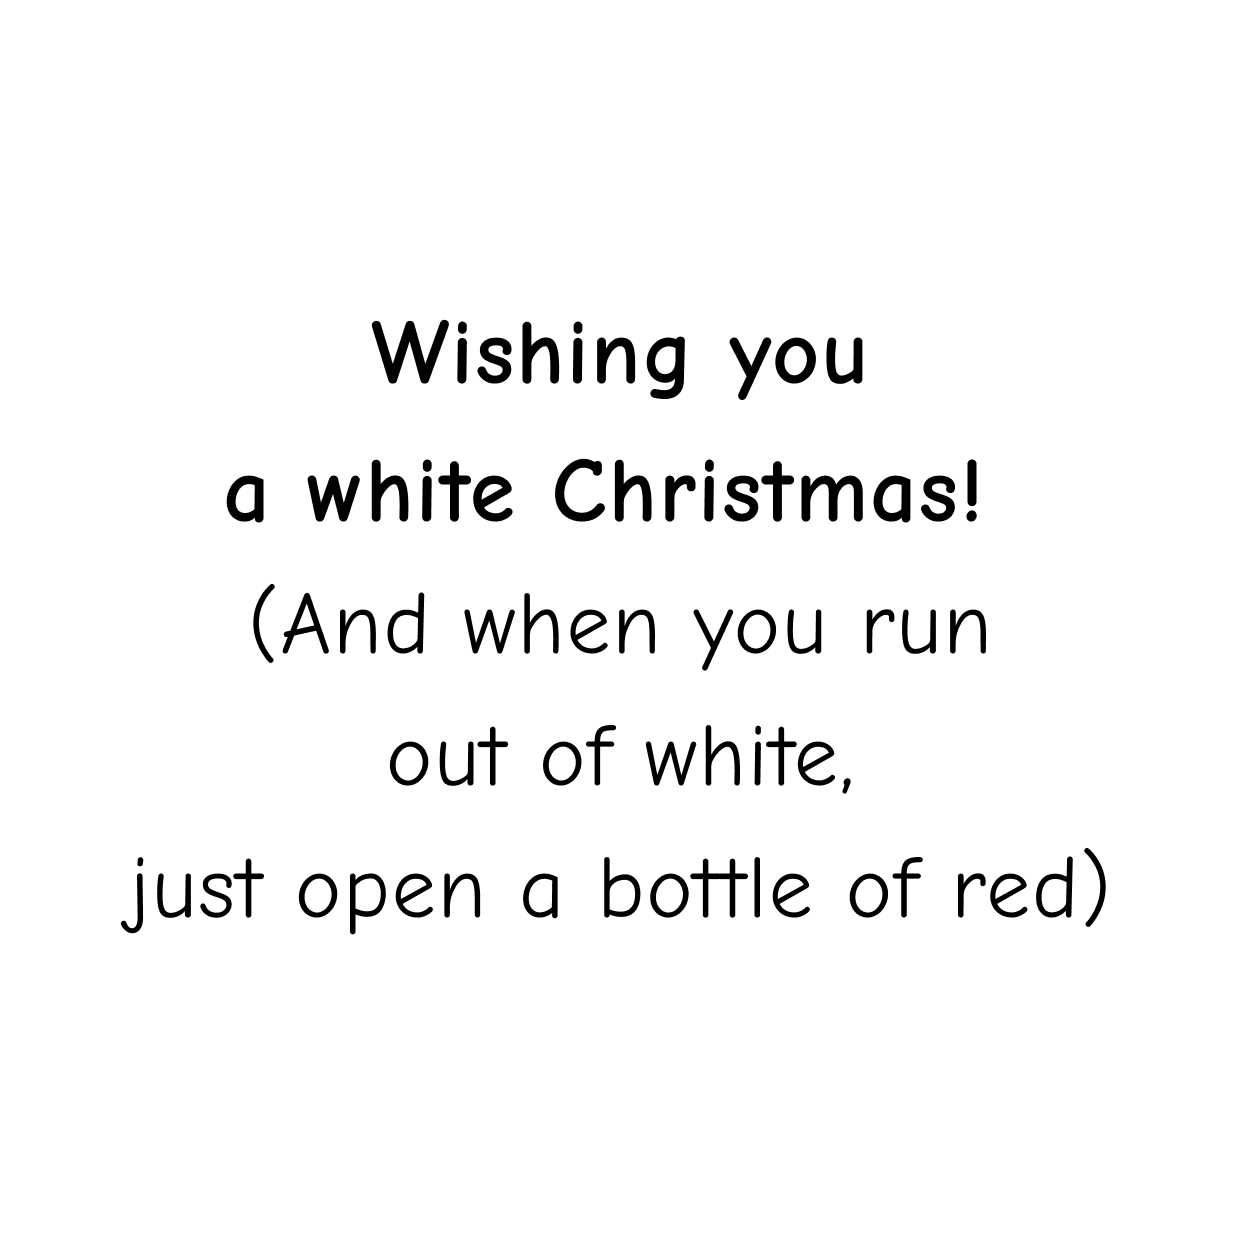 Free Christmas Card: Wishing You a White Christmas cover image.